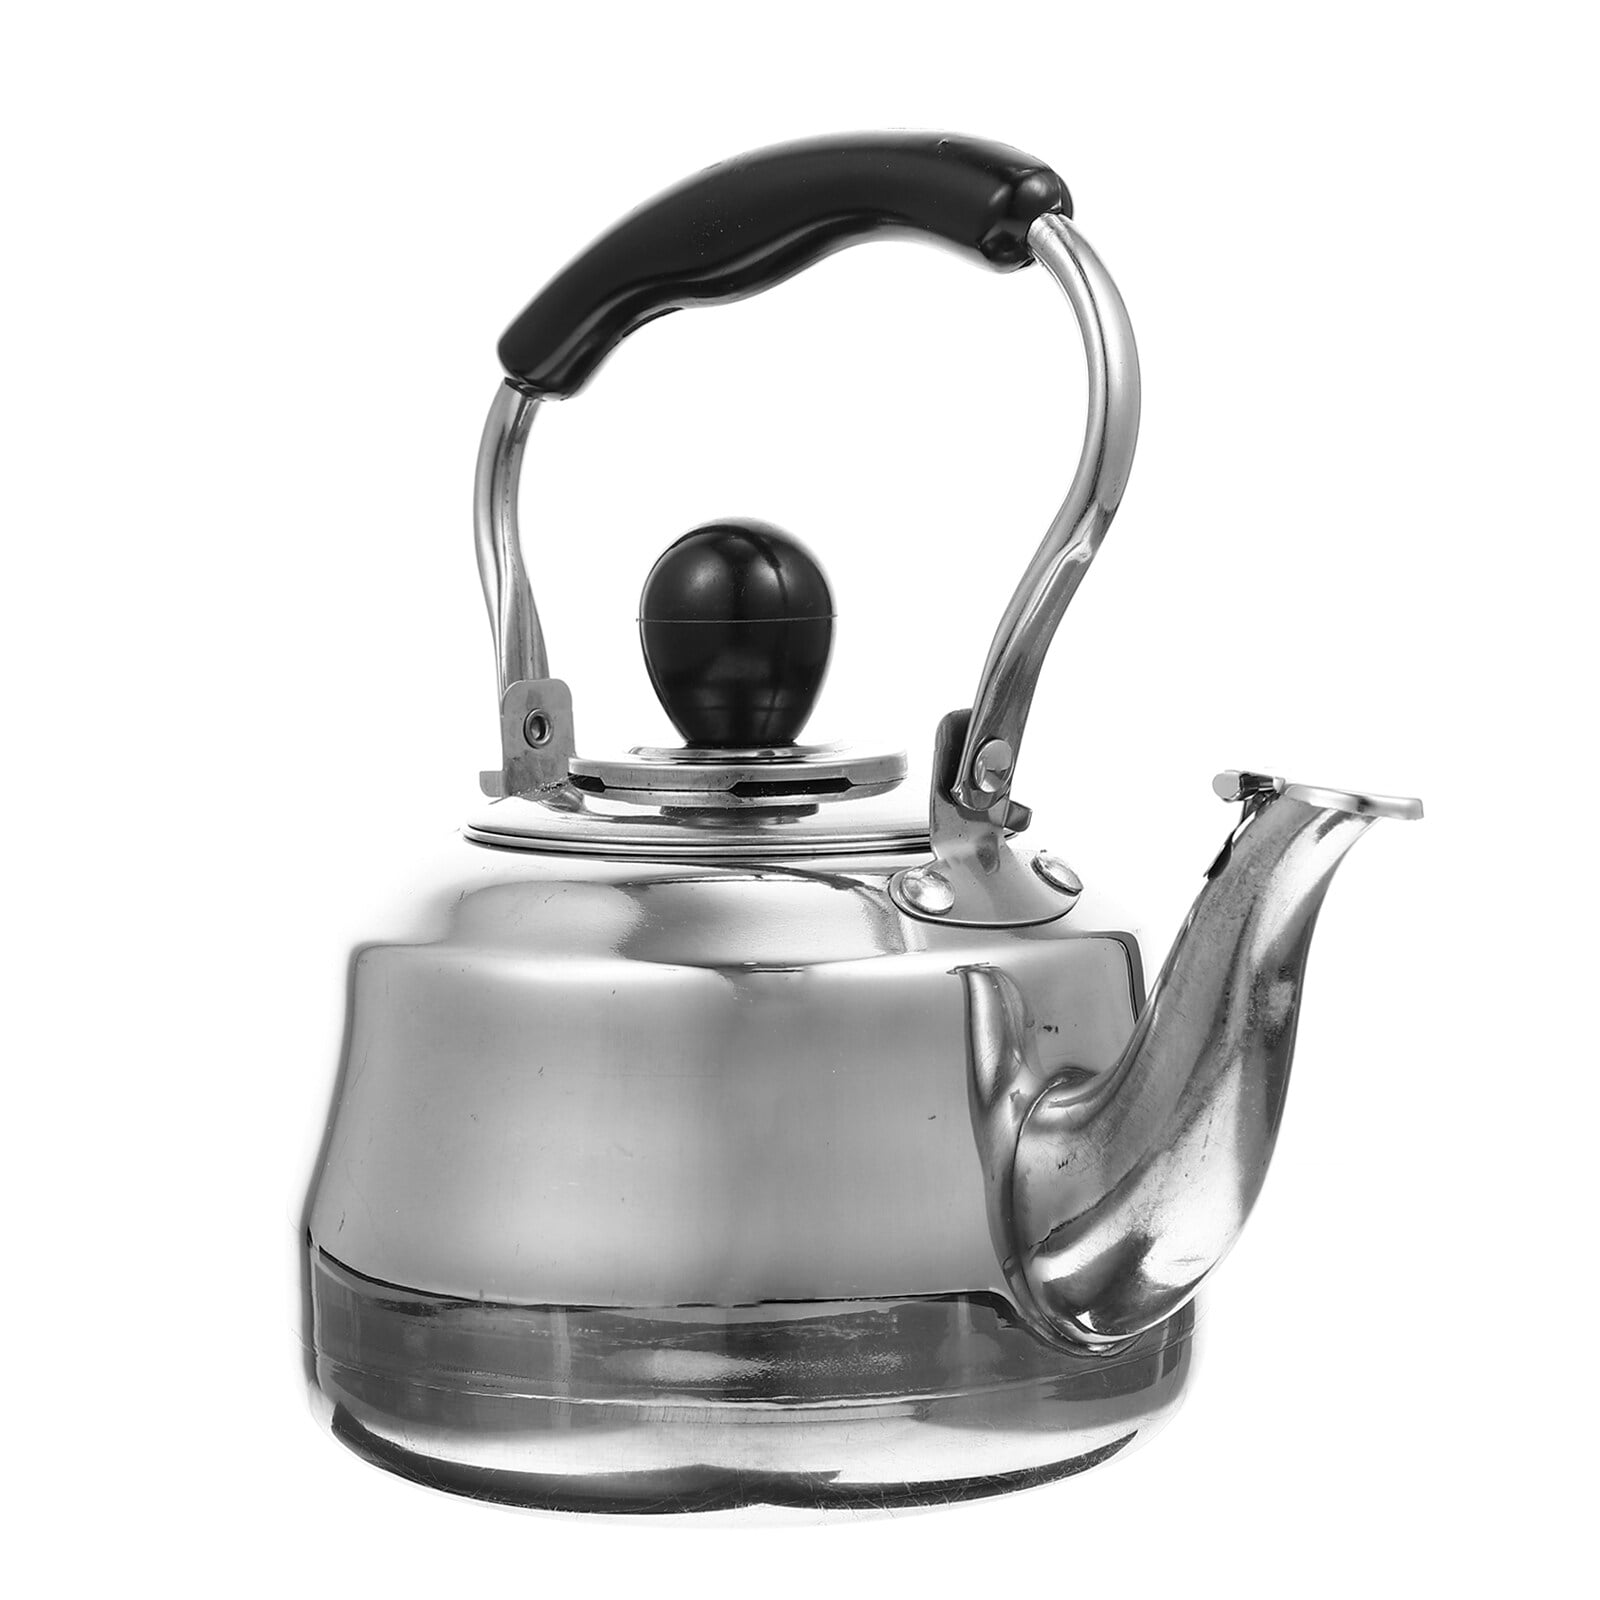 TEA KETTLE Stove Top Whistling Stainless Steel Teakettle Teapot 3L  DEEOUTLIFE